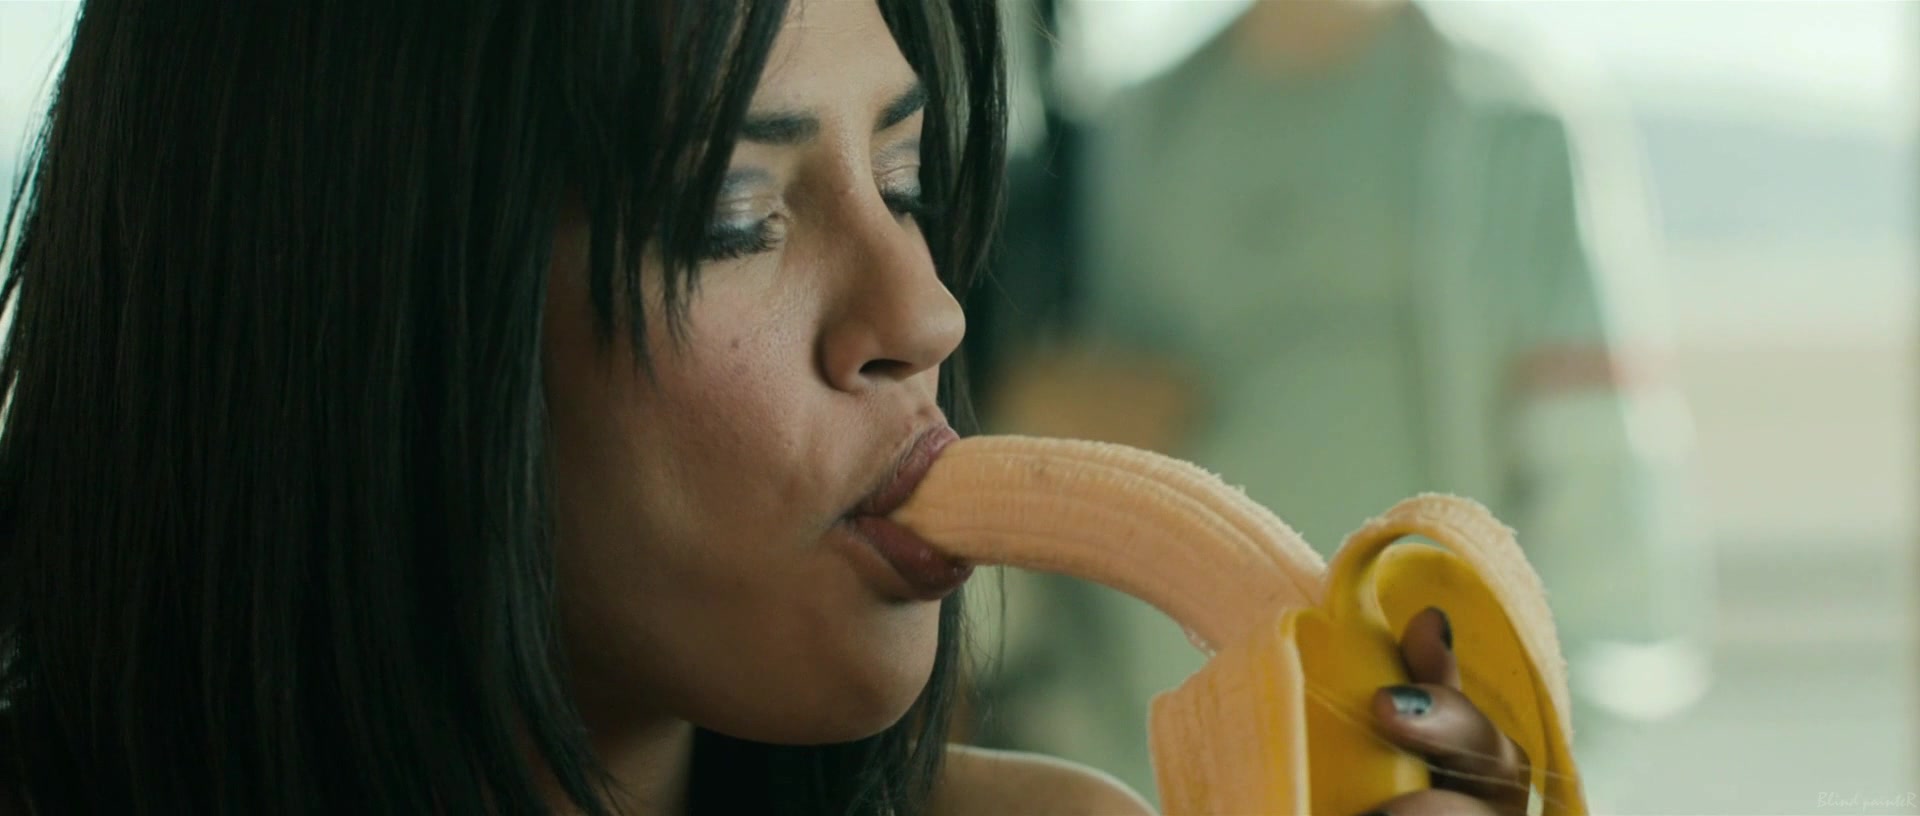 Krisztina Pratt Porn - Jessica Szohr hot - Love Bite (2012) Video Â» Best Sexy Scene ...